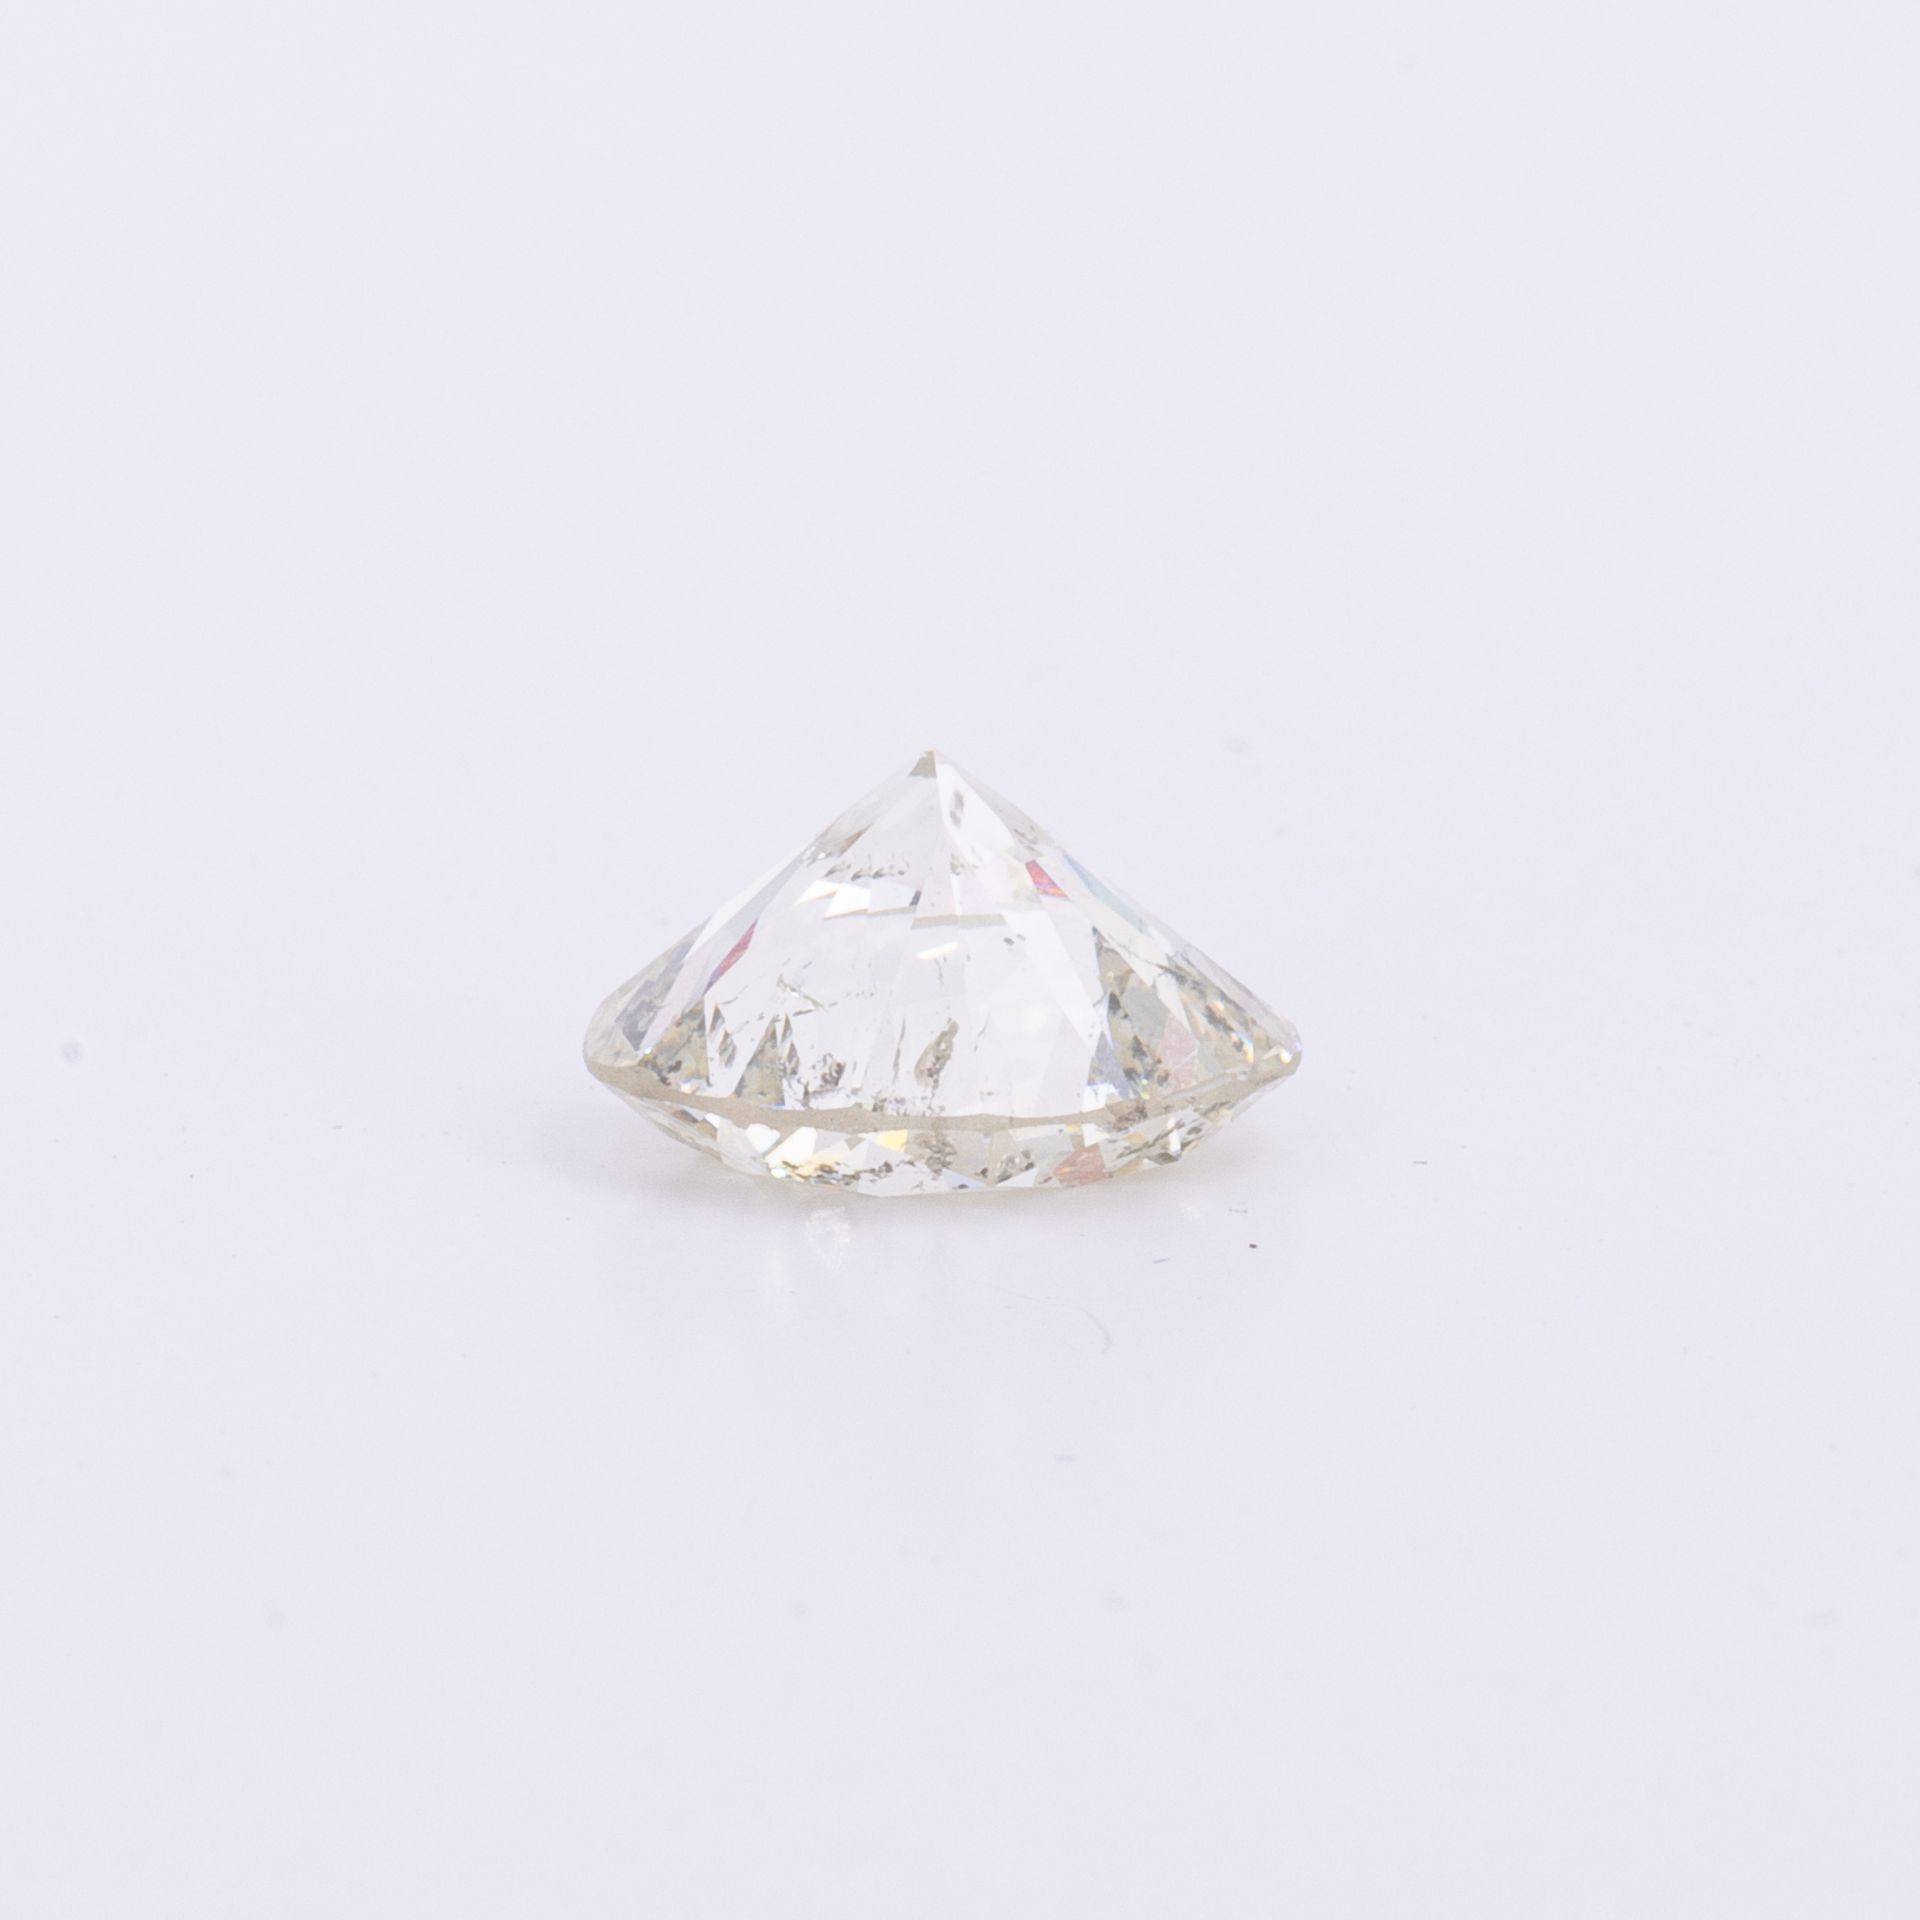 Loose-Brilliant-Cut-Diamond - Image 4 of 4